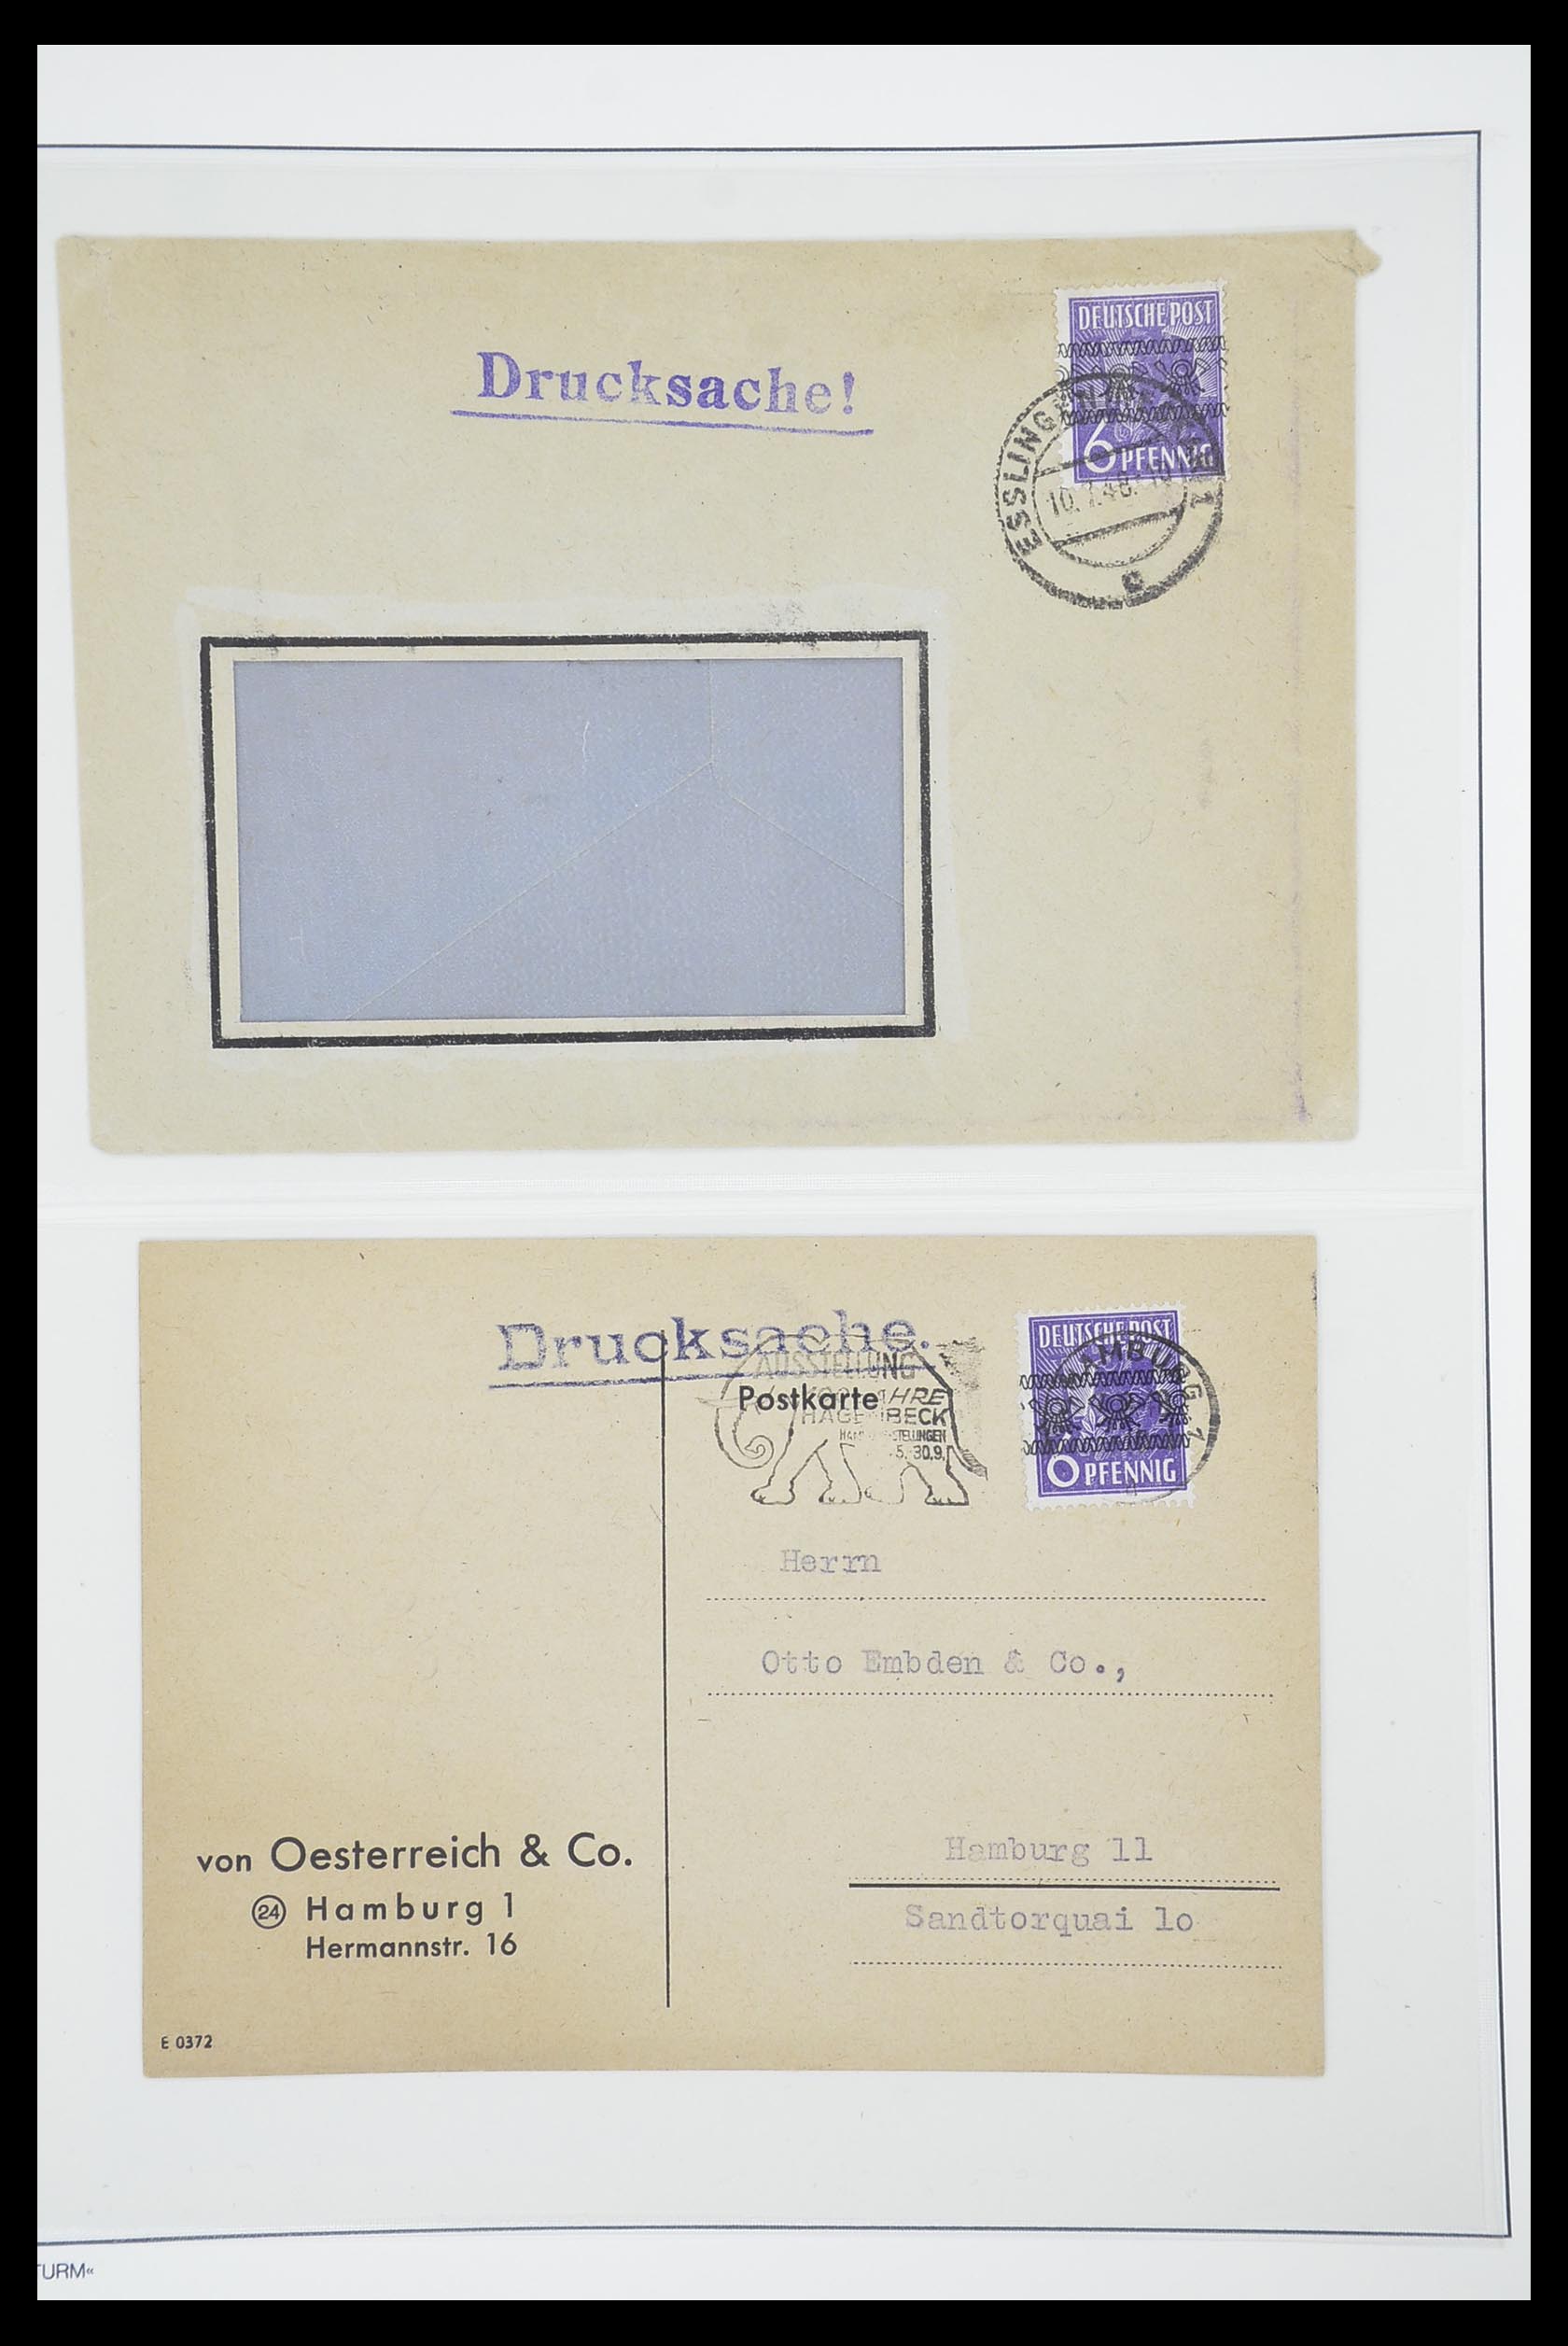 33837 054 - Stamp collection 33837 German Zones 1945-1948.